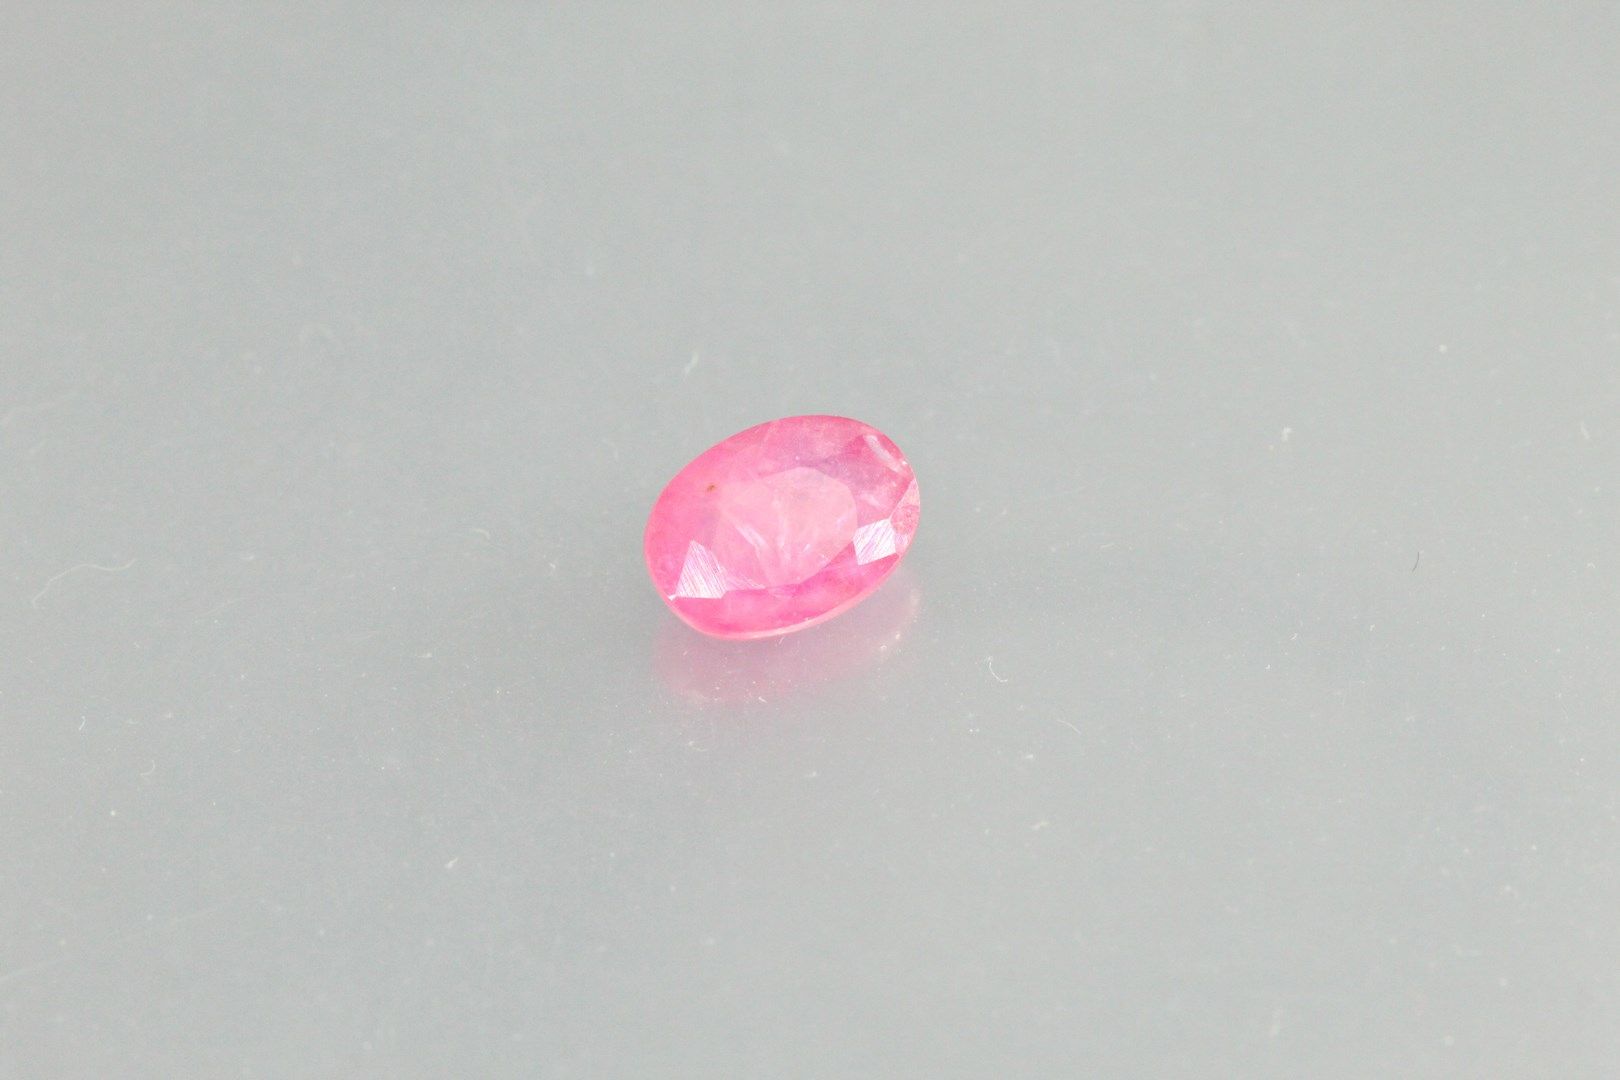 Null Zaffiro rosa ovale su carta.

Peso: 1,02 carati. 

Piani di separazione.